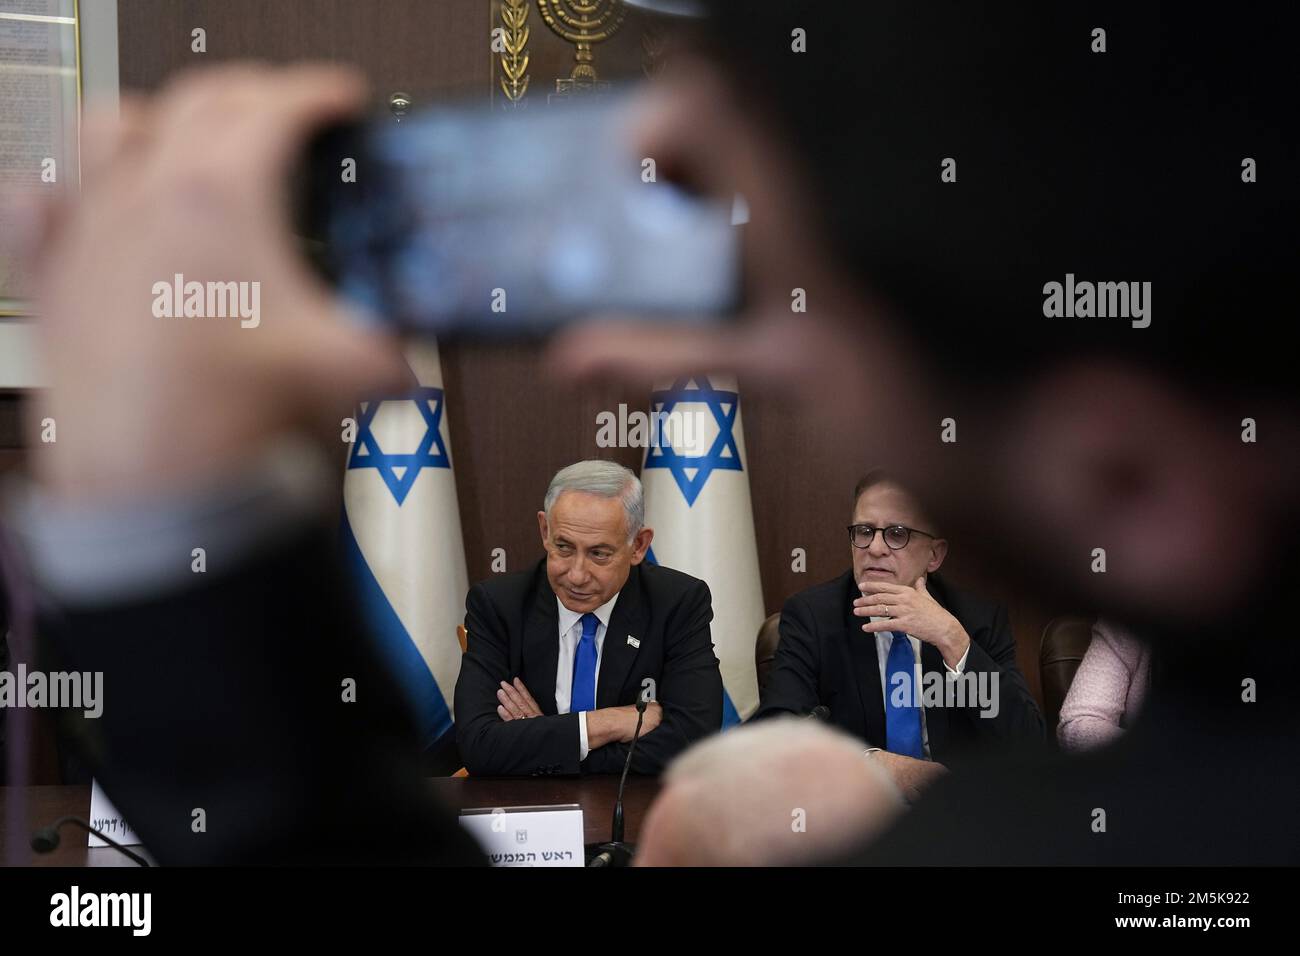 Jerusalén, Israel. 29th de diciembre de 2022. El primer ministro israelí, Benjamin Netanyahu, recientemente juramentado, asiste a una reunión de gabinete en Jerusalén el jueves 29 de diciembre de 2022. Foto de Ariel Schalit,/UPI Crédito: UPI/Alamy Live News Foto de stock